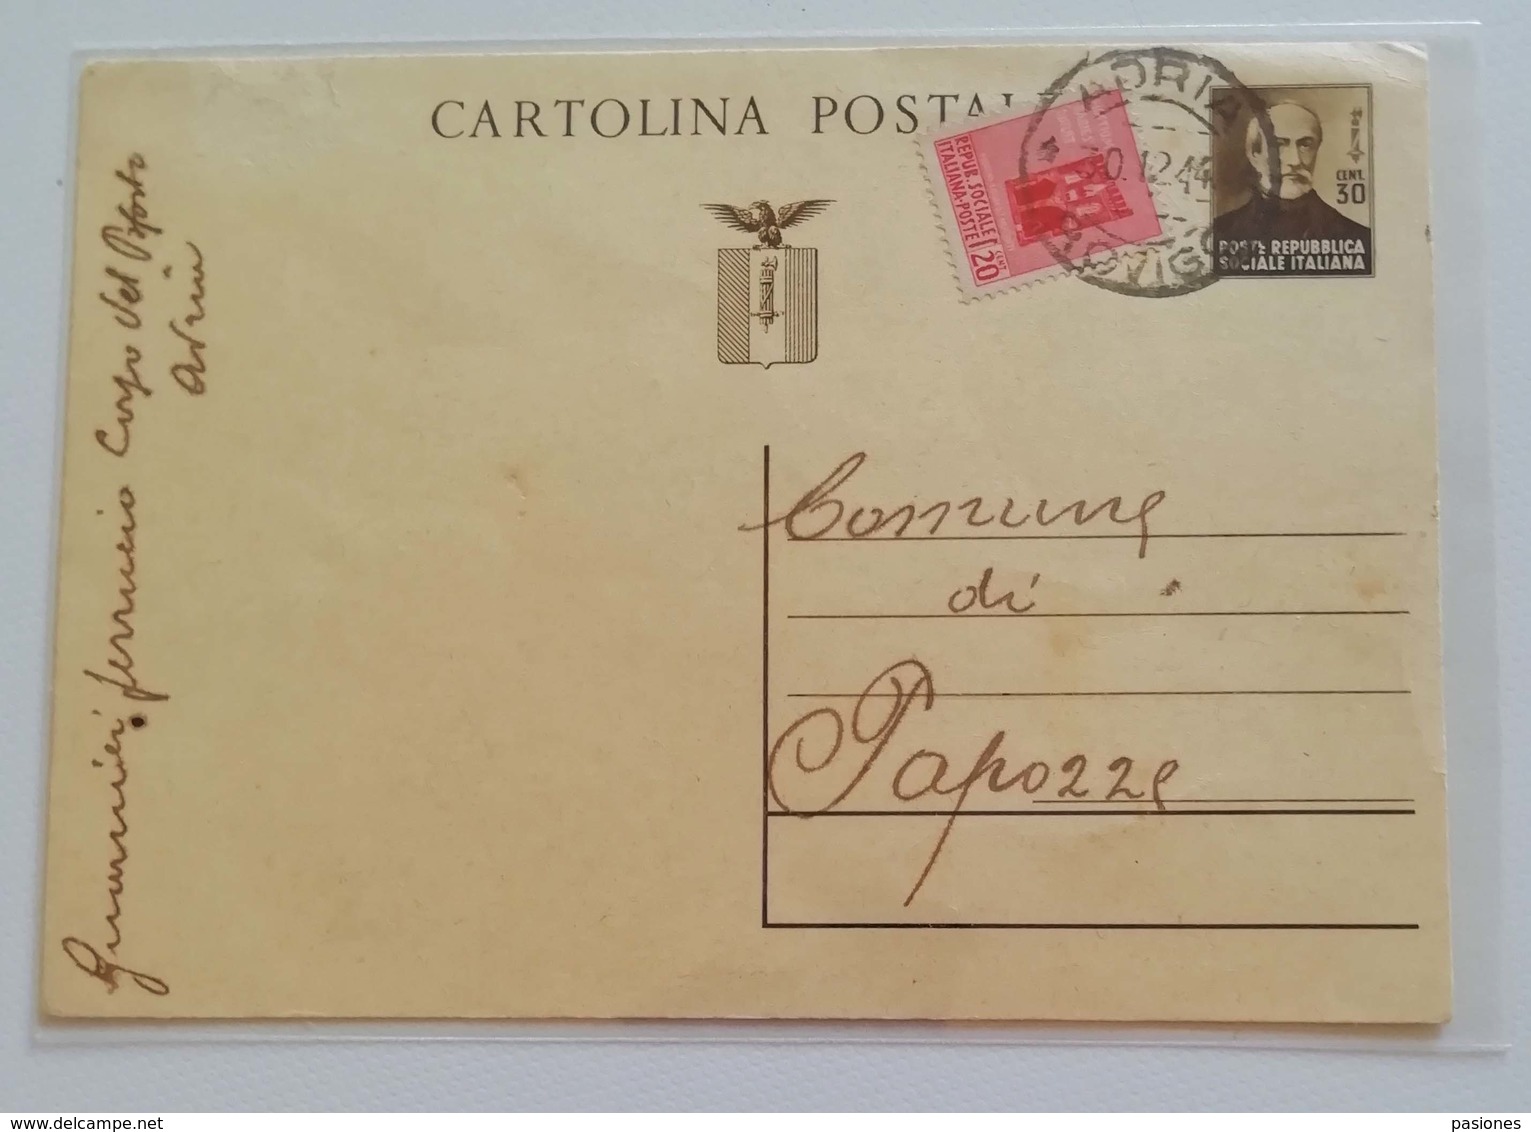 Cartolina Postale Adria-Papozze, 30/12/1944 (uso Nel Distretto) - Entero Postal